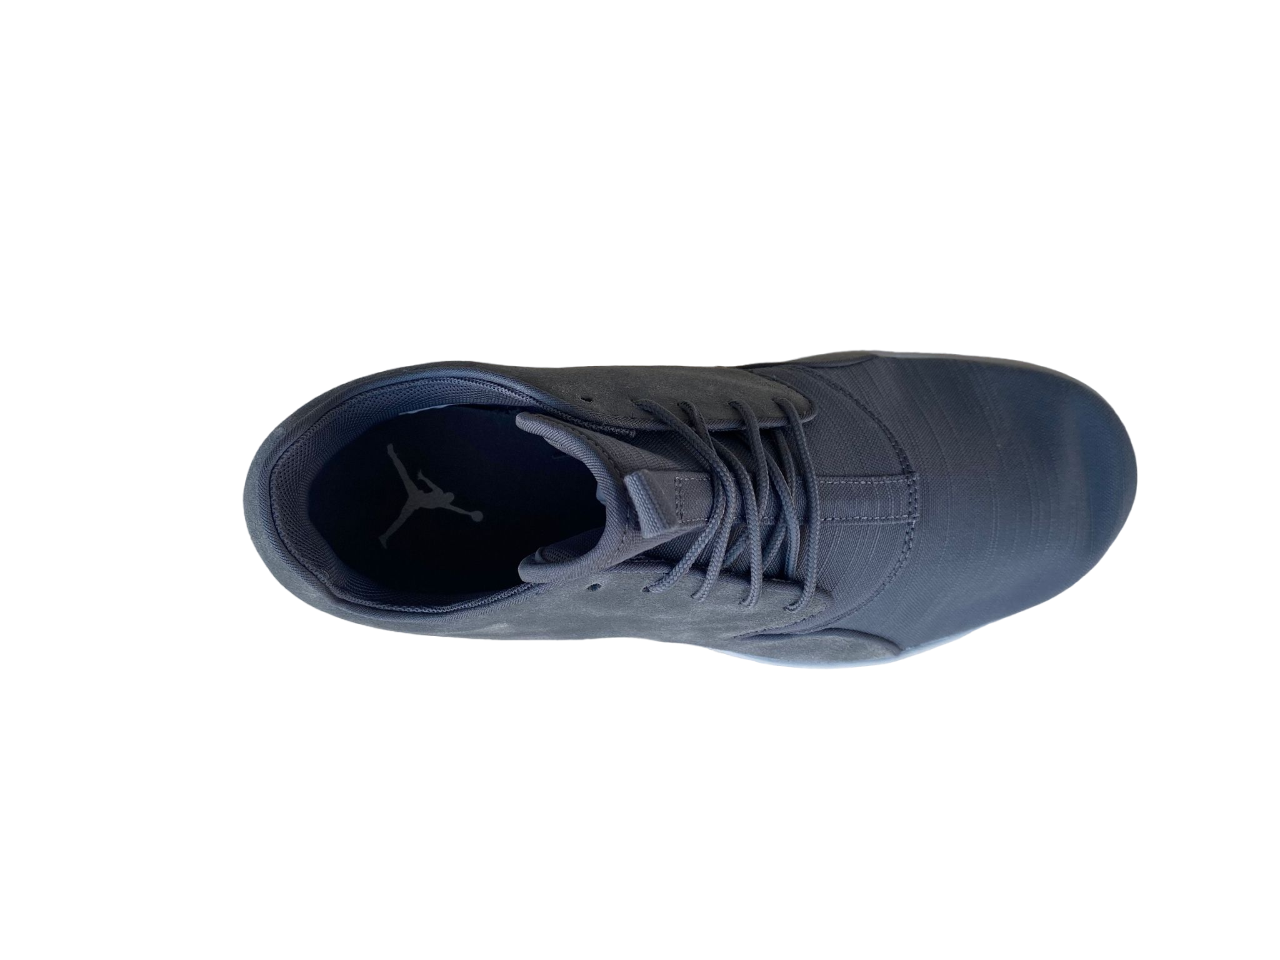 Jordan scarpa sneakers da uomo Eclipse 724368 004 grigio